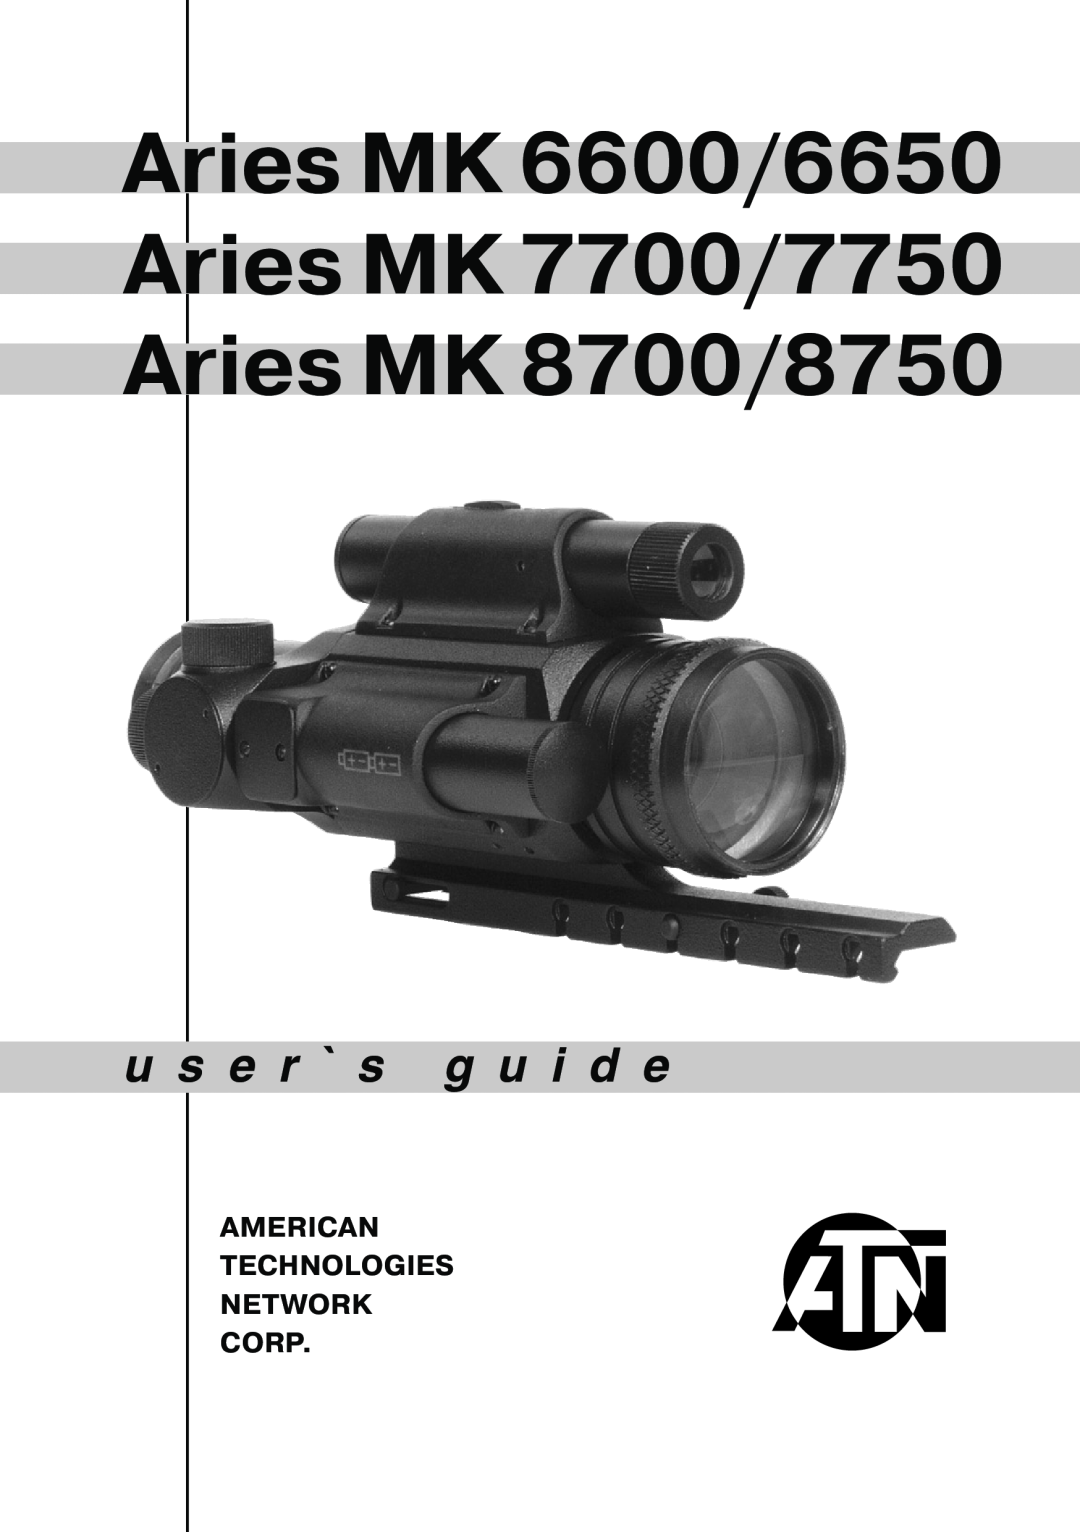 ATN MK 7750, MK 6650, MK 8750 manual Aries MK 6600/6650 Aries MK 7700/7750 Aries MK 8700/8750, u s e r ` s g u i d e 